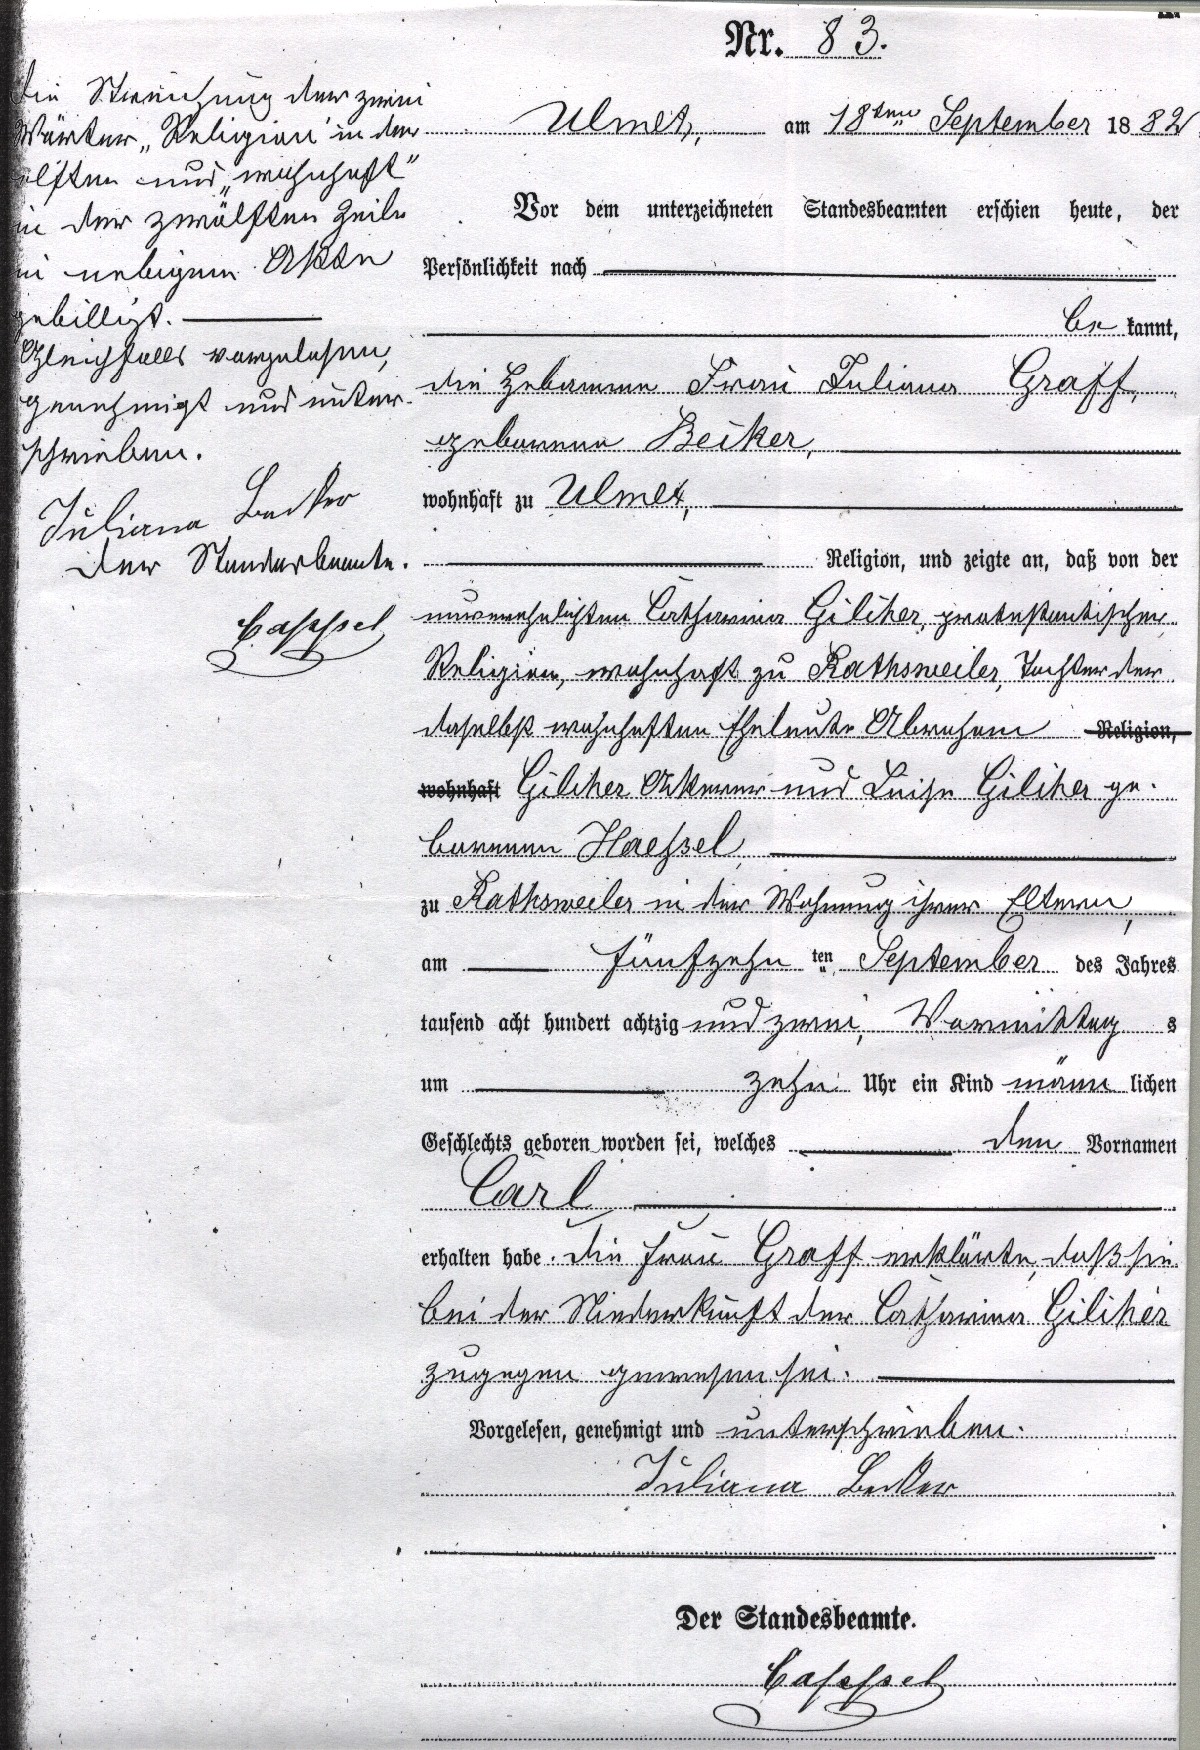 Birth registration for Carl Gilcher, 
1882